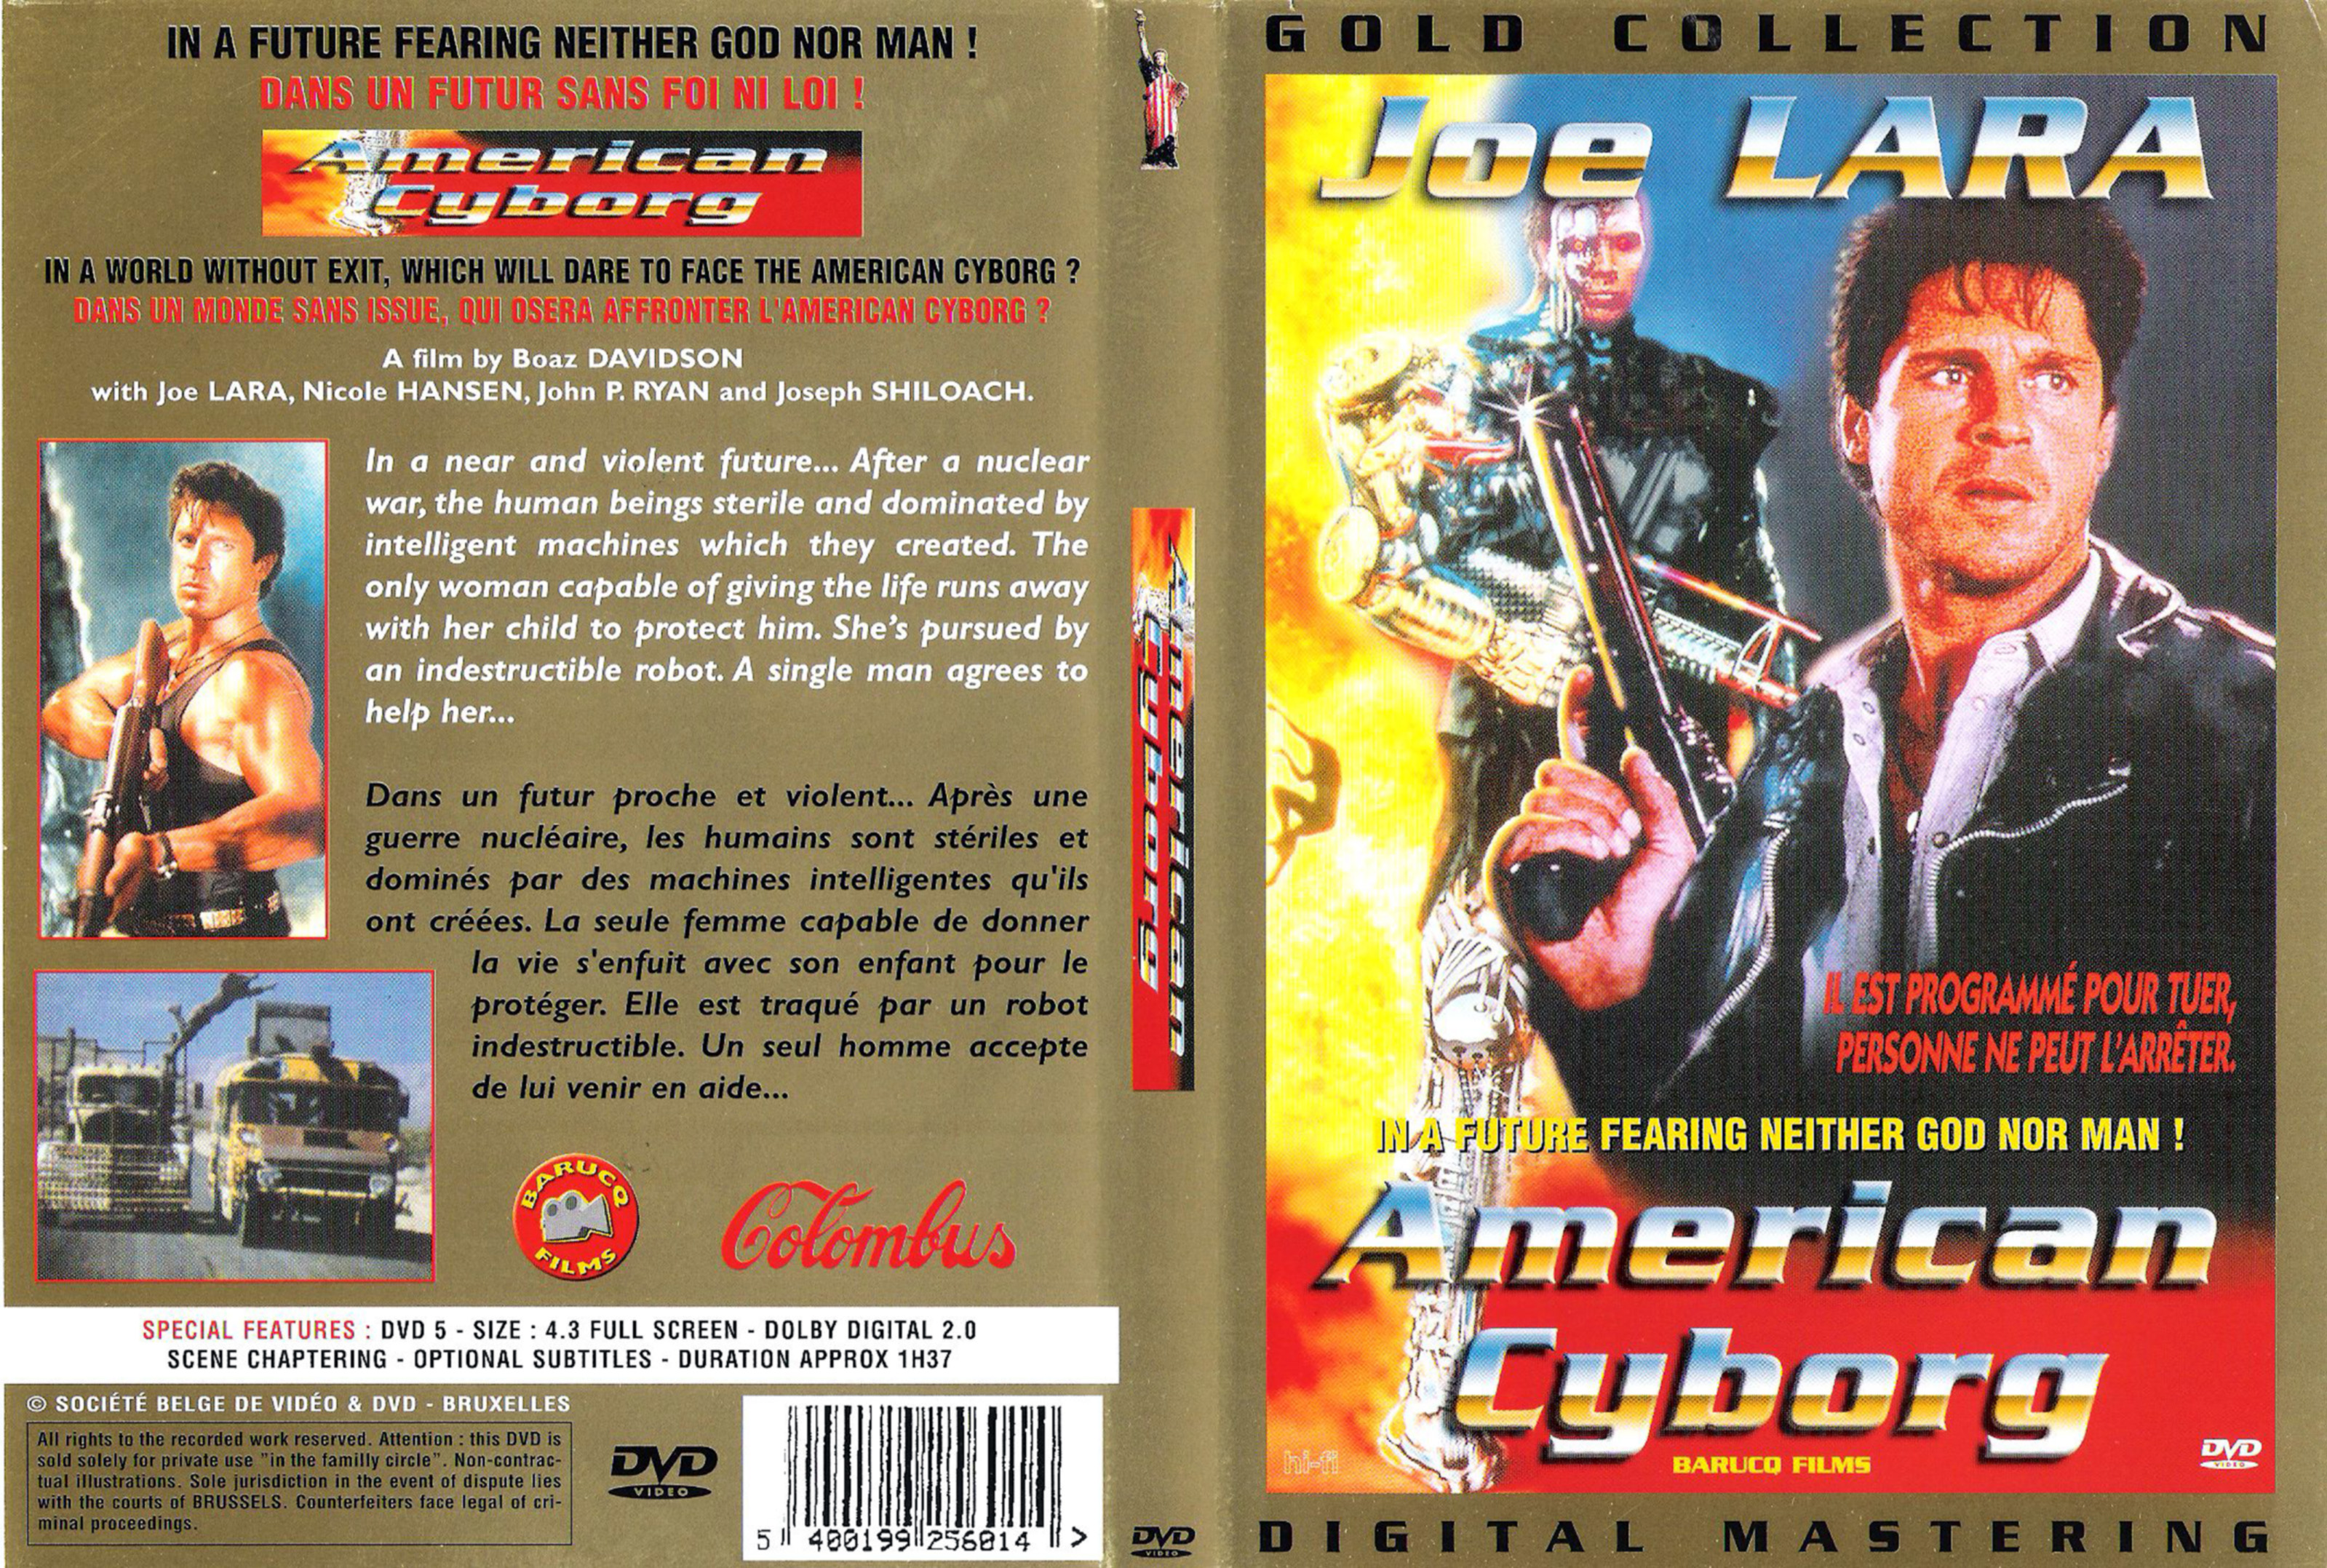 Jaquette DVD American cyborg v2